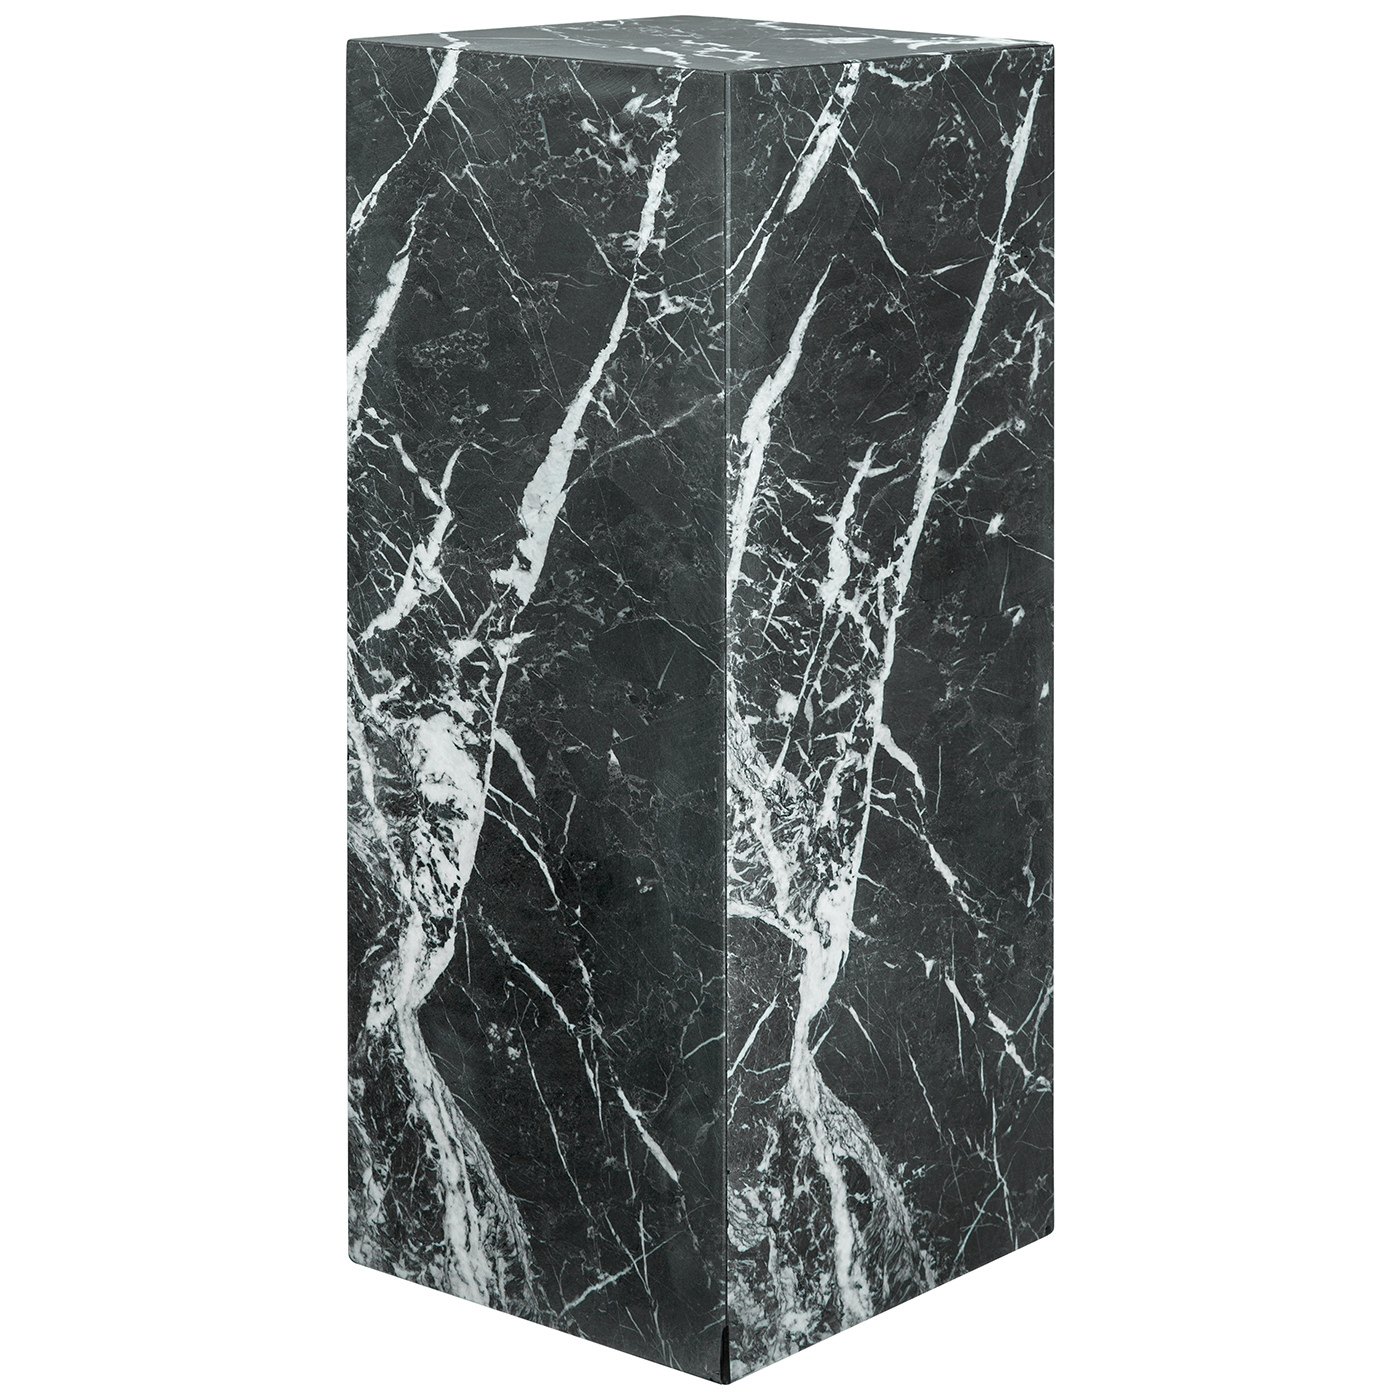 TI 1739 409 12 – Cubic Pedestal Marble Black Alanya 35x35x90cm (2)